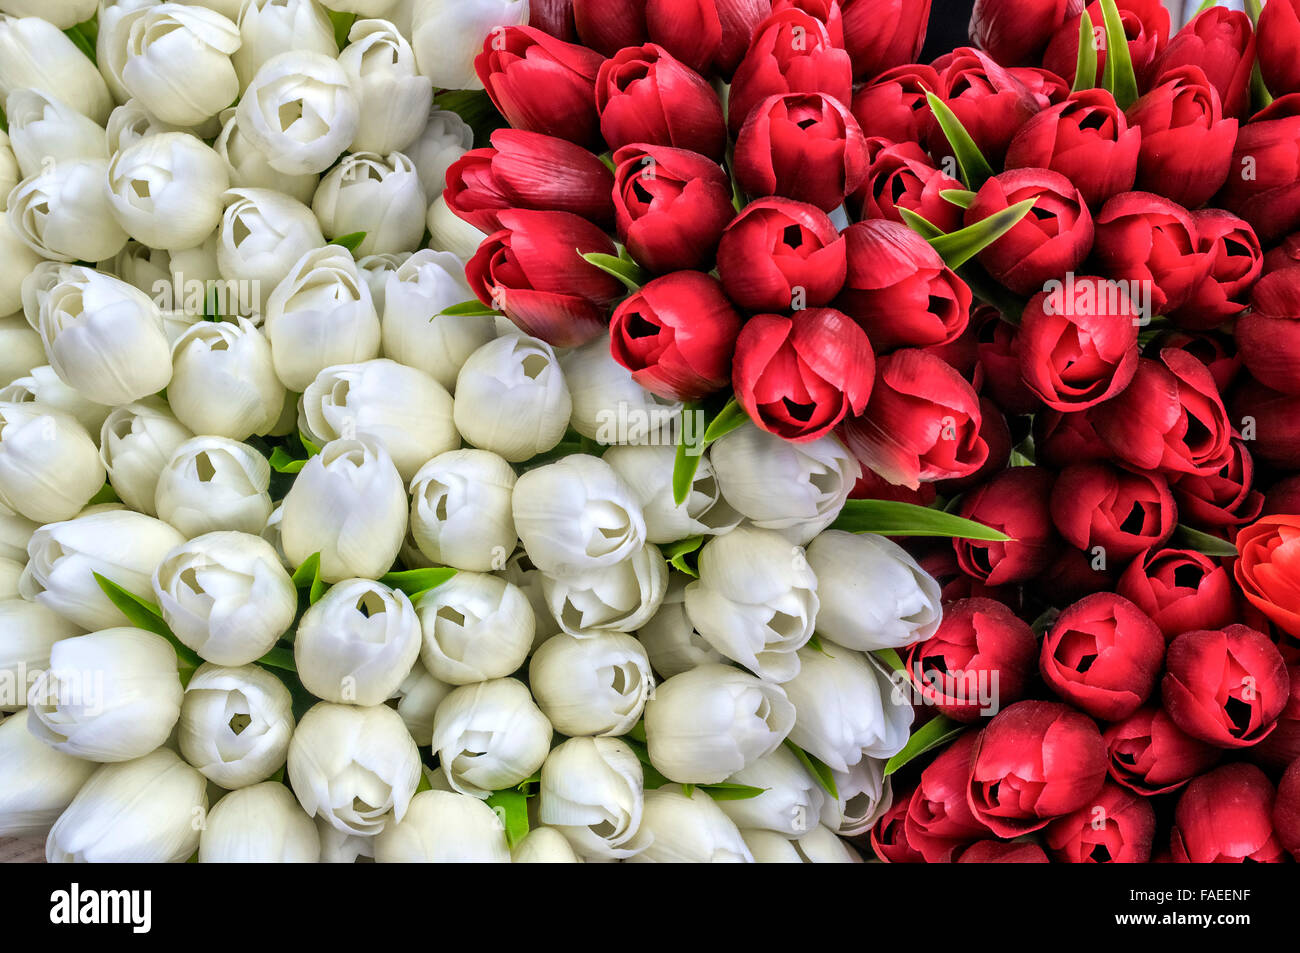 Ying yang wooden craft tulips Stock Photo